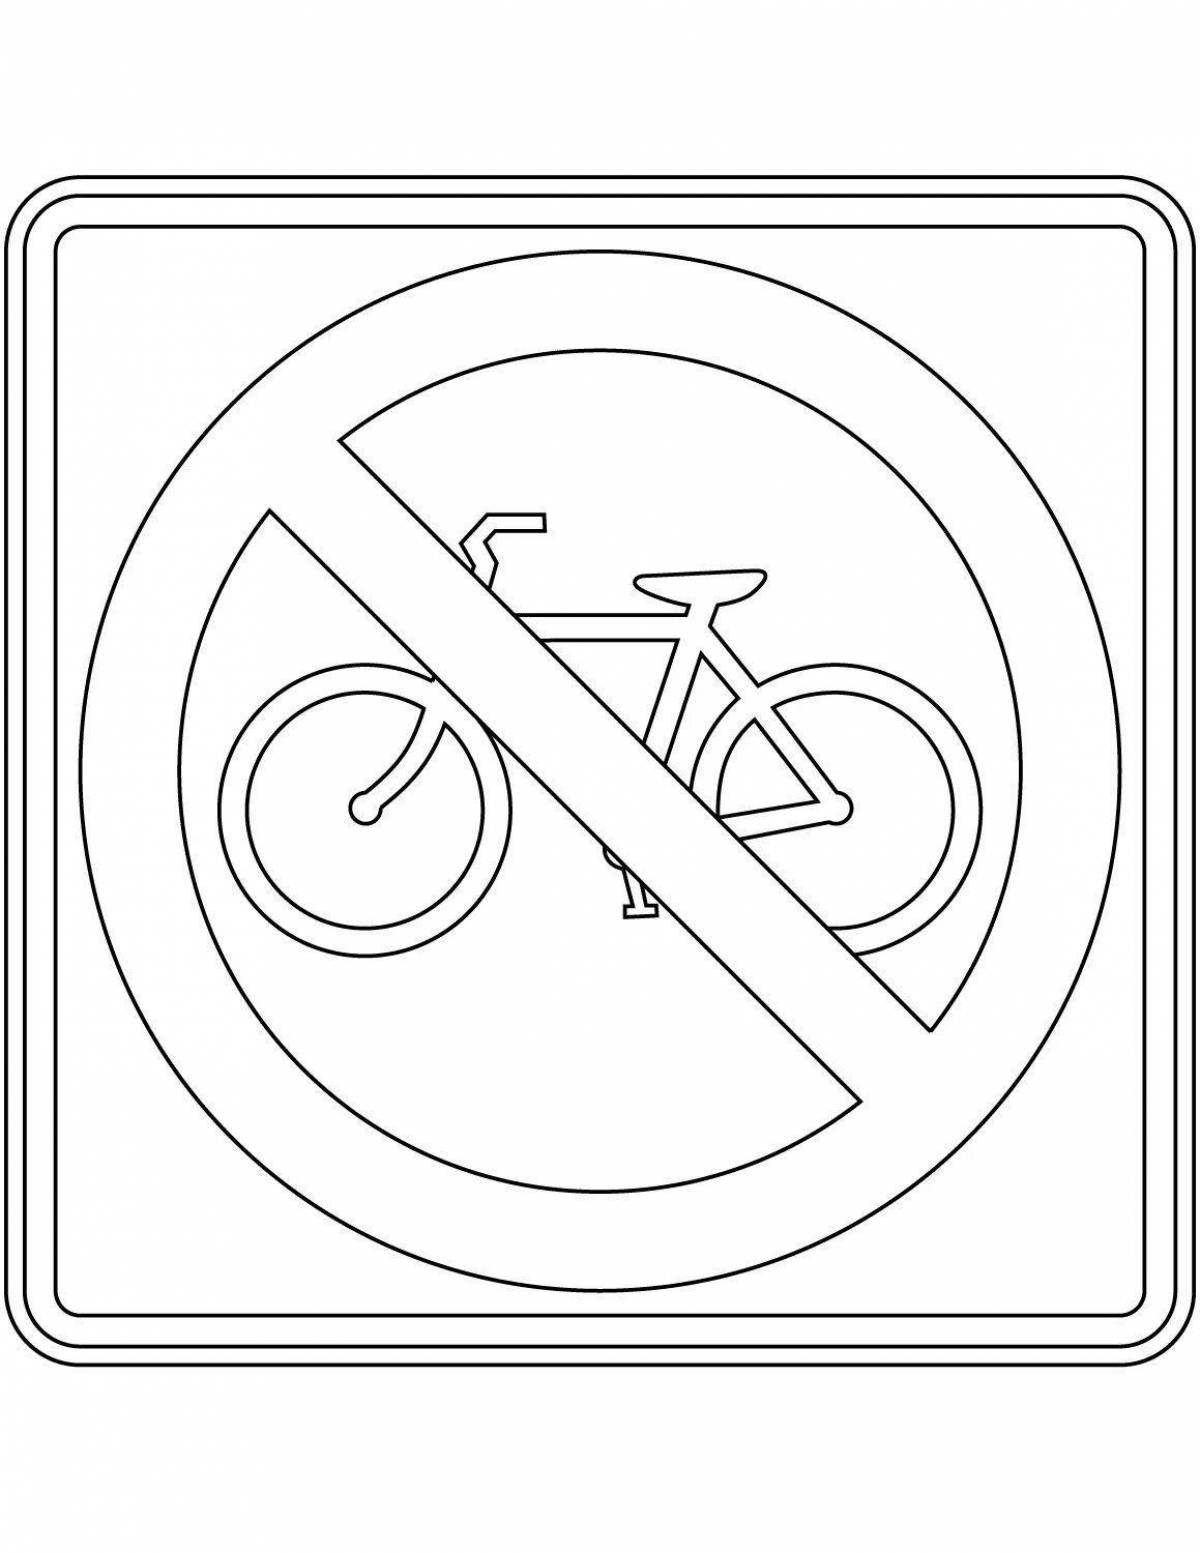 Bicycle no fun coloring book